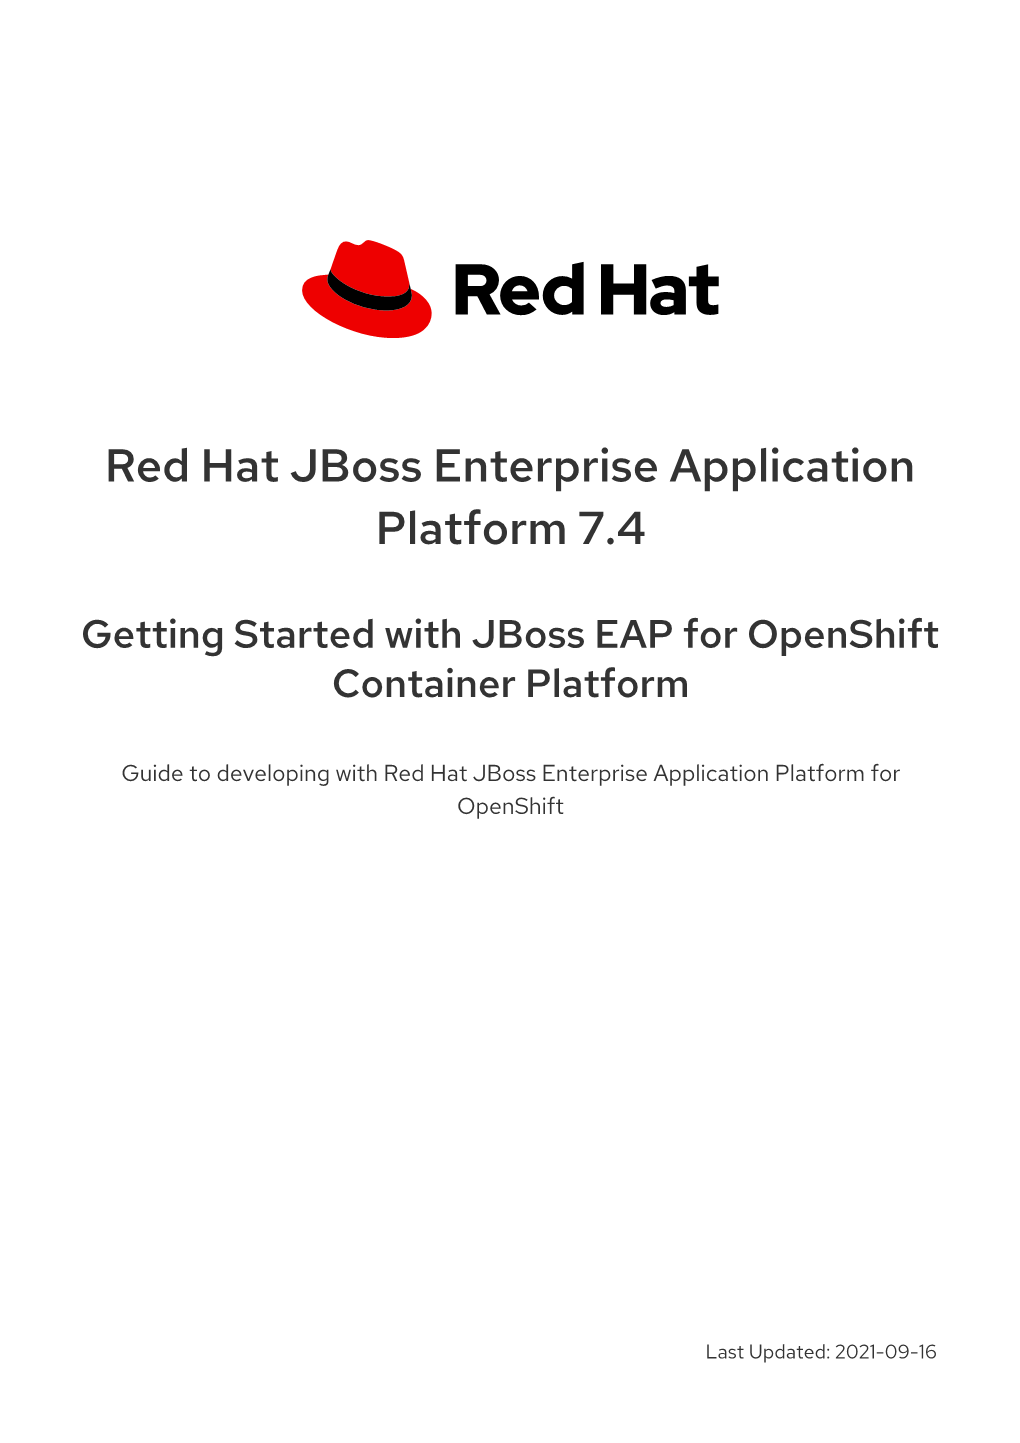 Red Hat Jboss Enterprise Application Platform 7.4 Getting Started with Jboss EAP for Openshift Container Platform